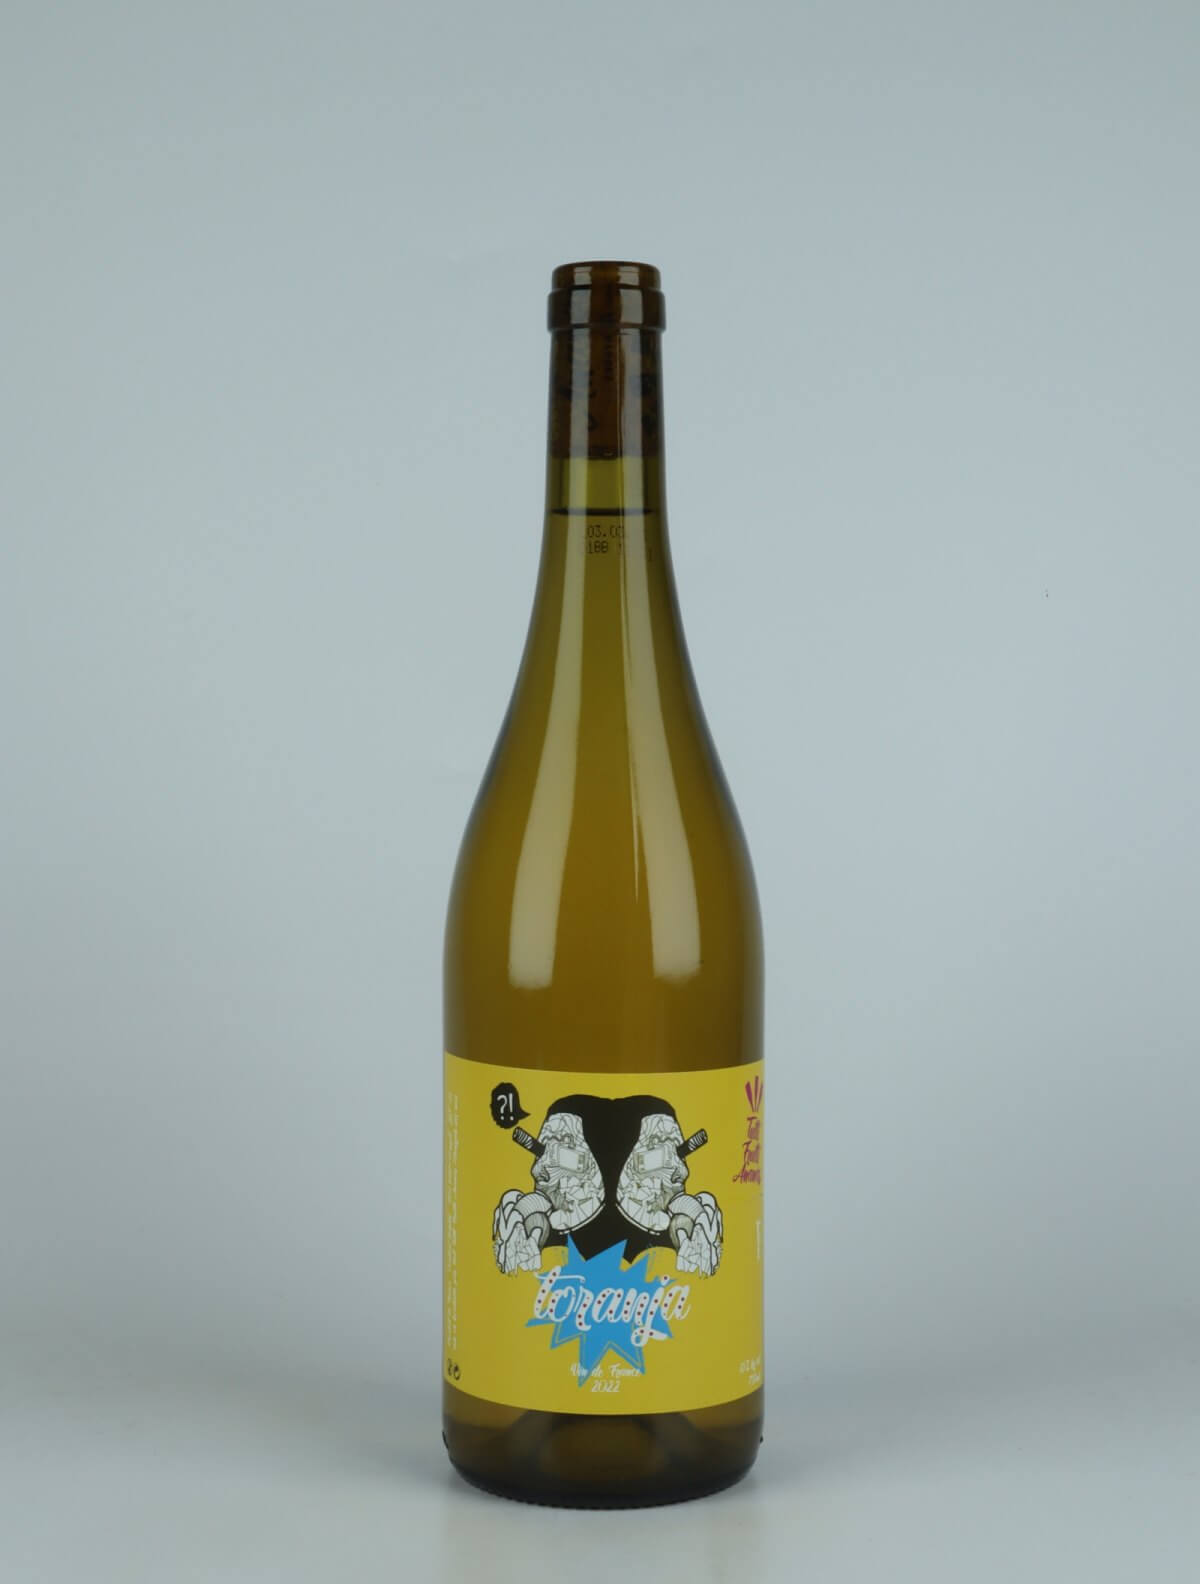 A bottle 2022 Toranja White wine from Tutti Frutti Ananas, Rousillon in France